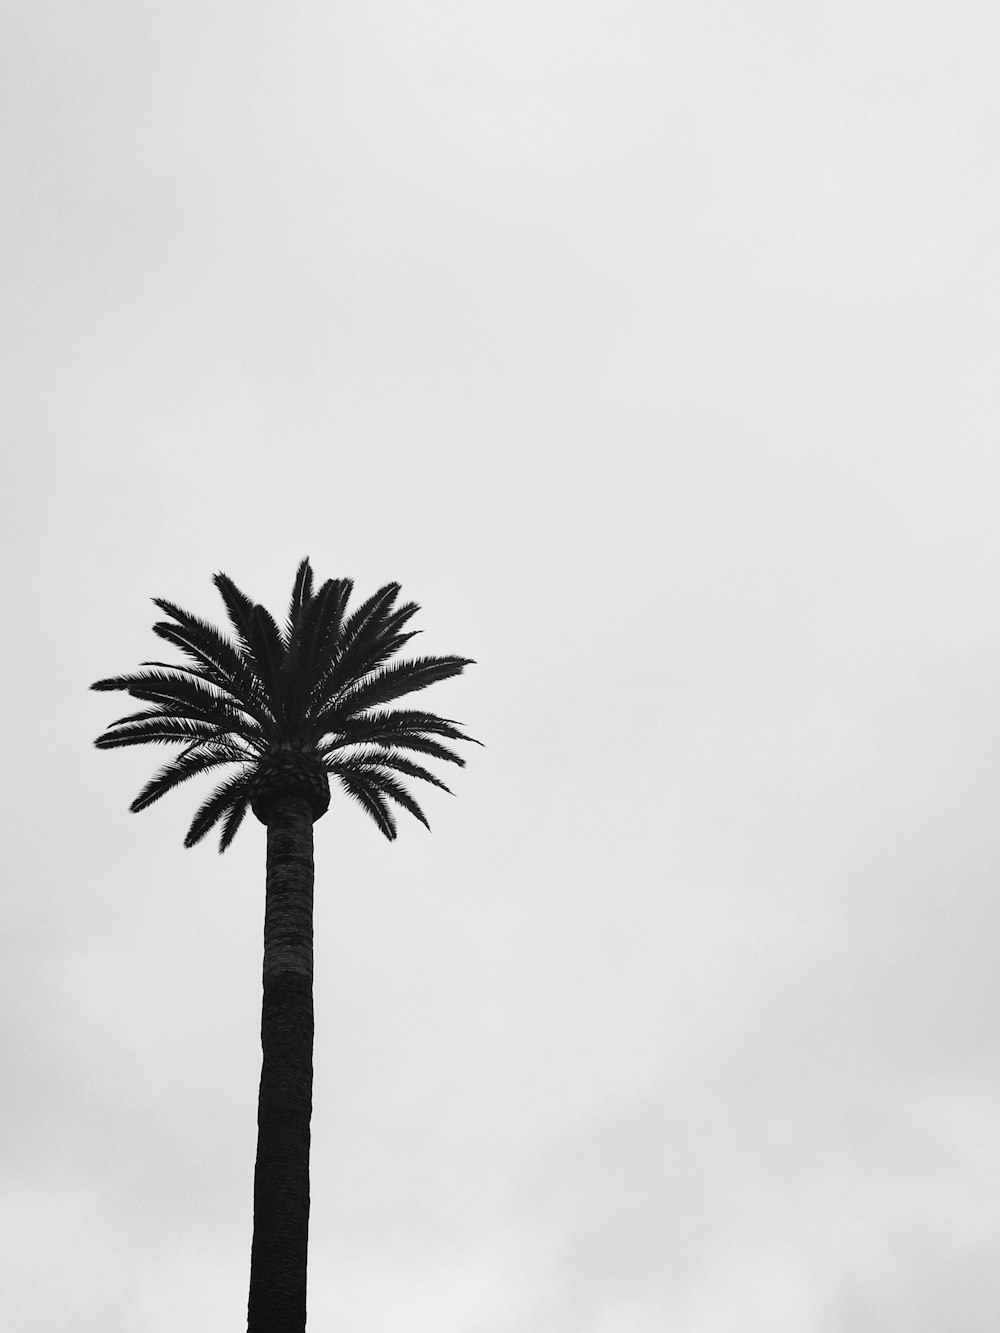 green palm tree at daytime